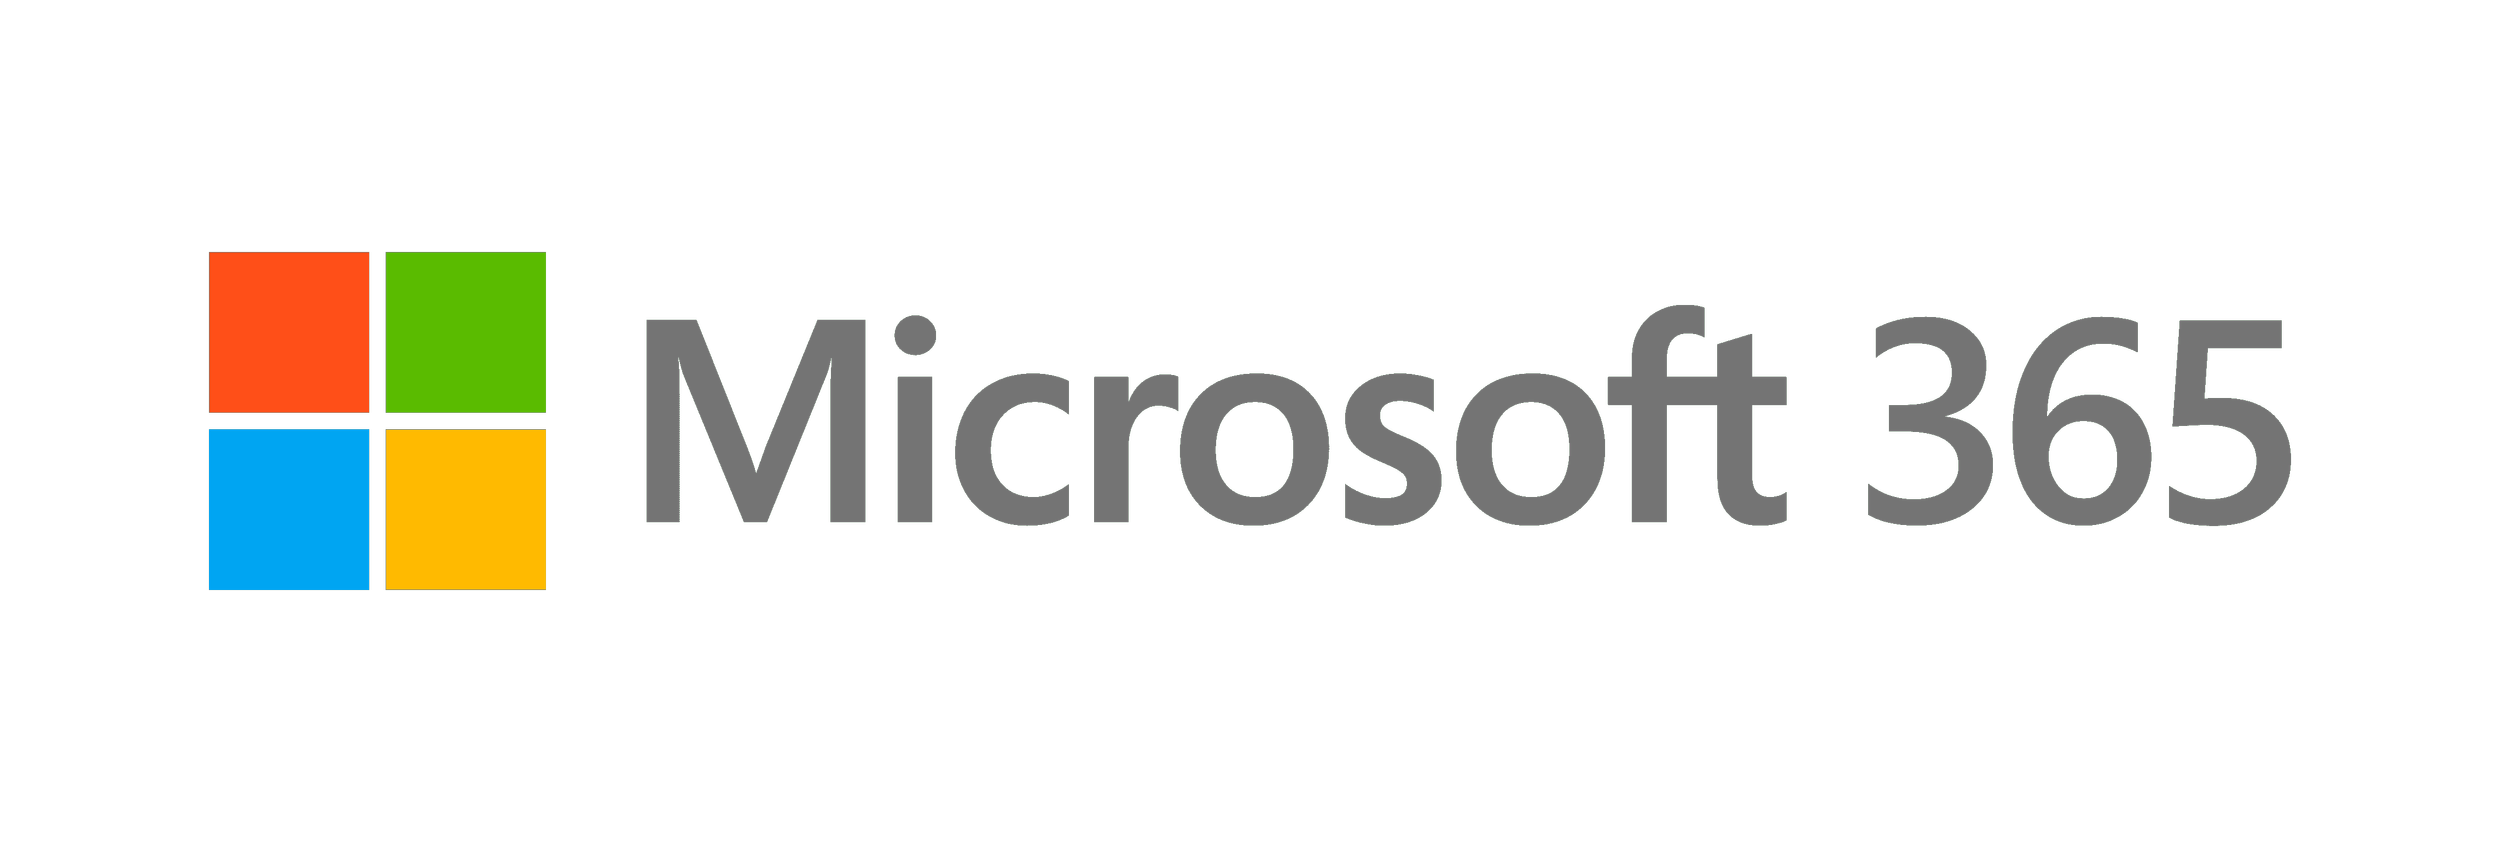 Microsoft-Office-365-Logo.png